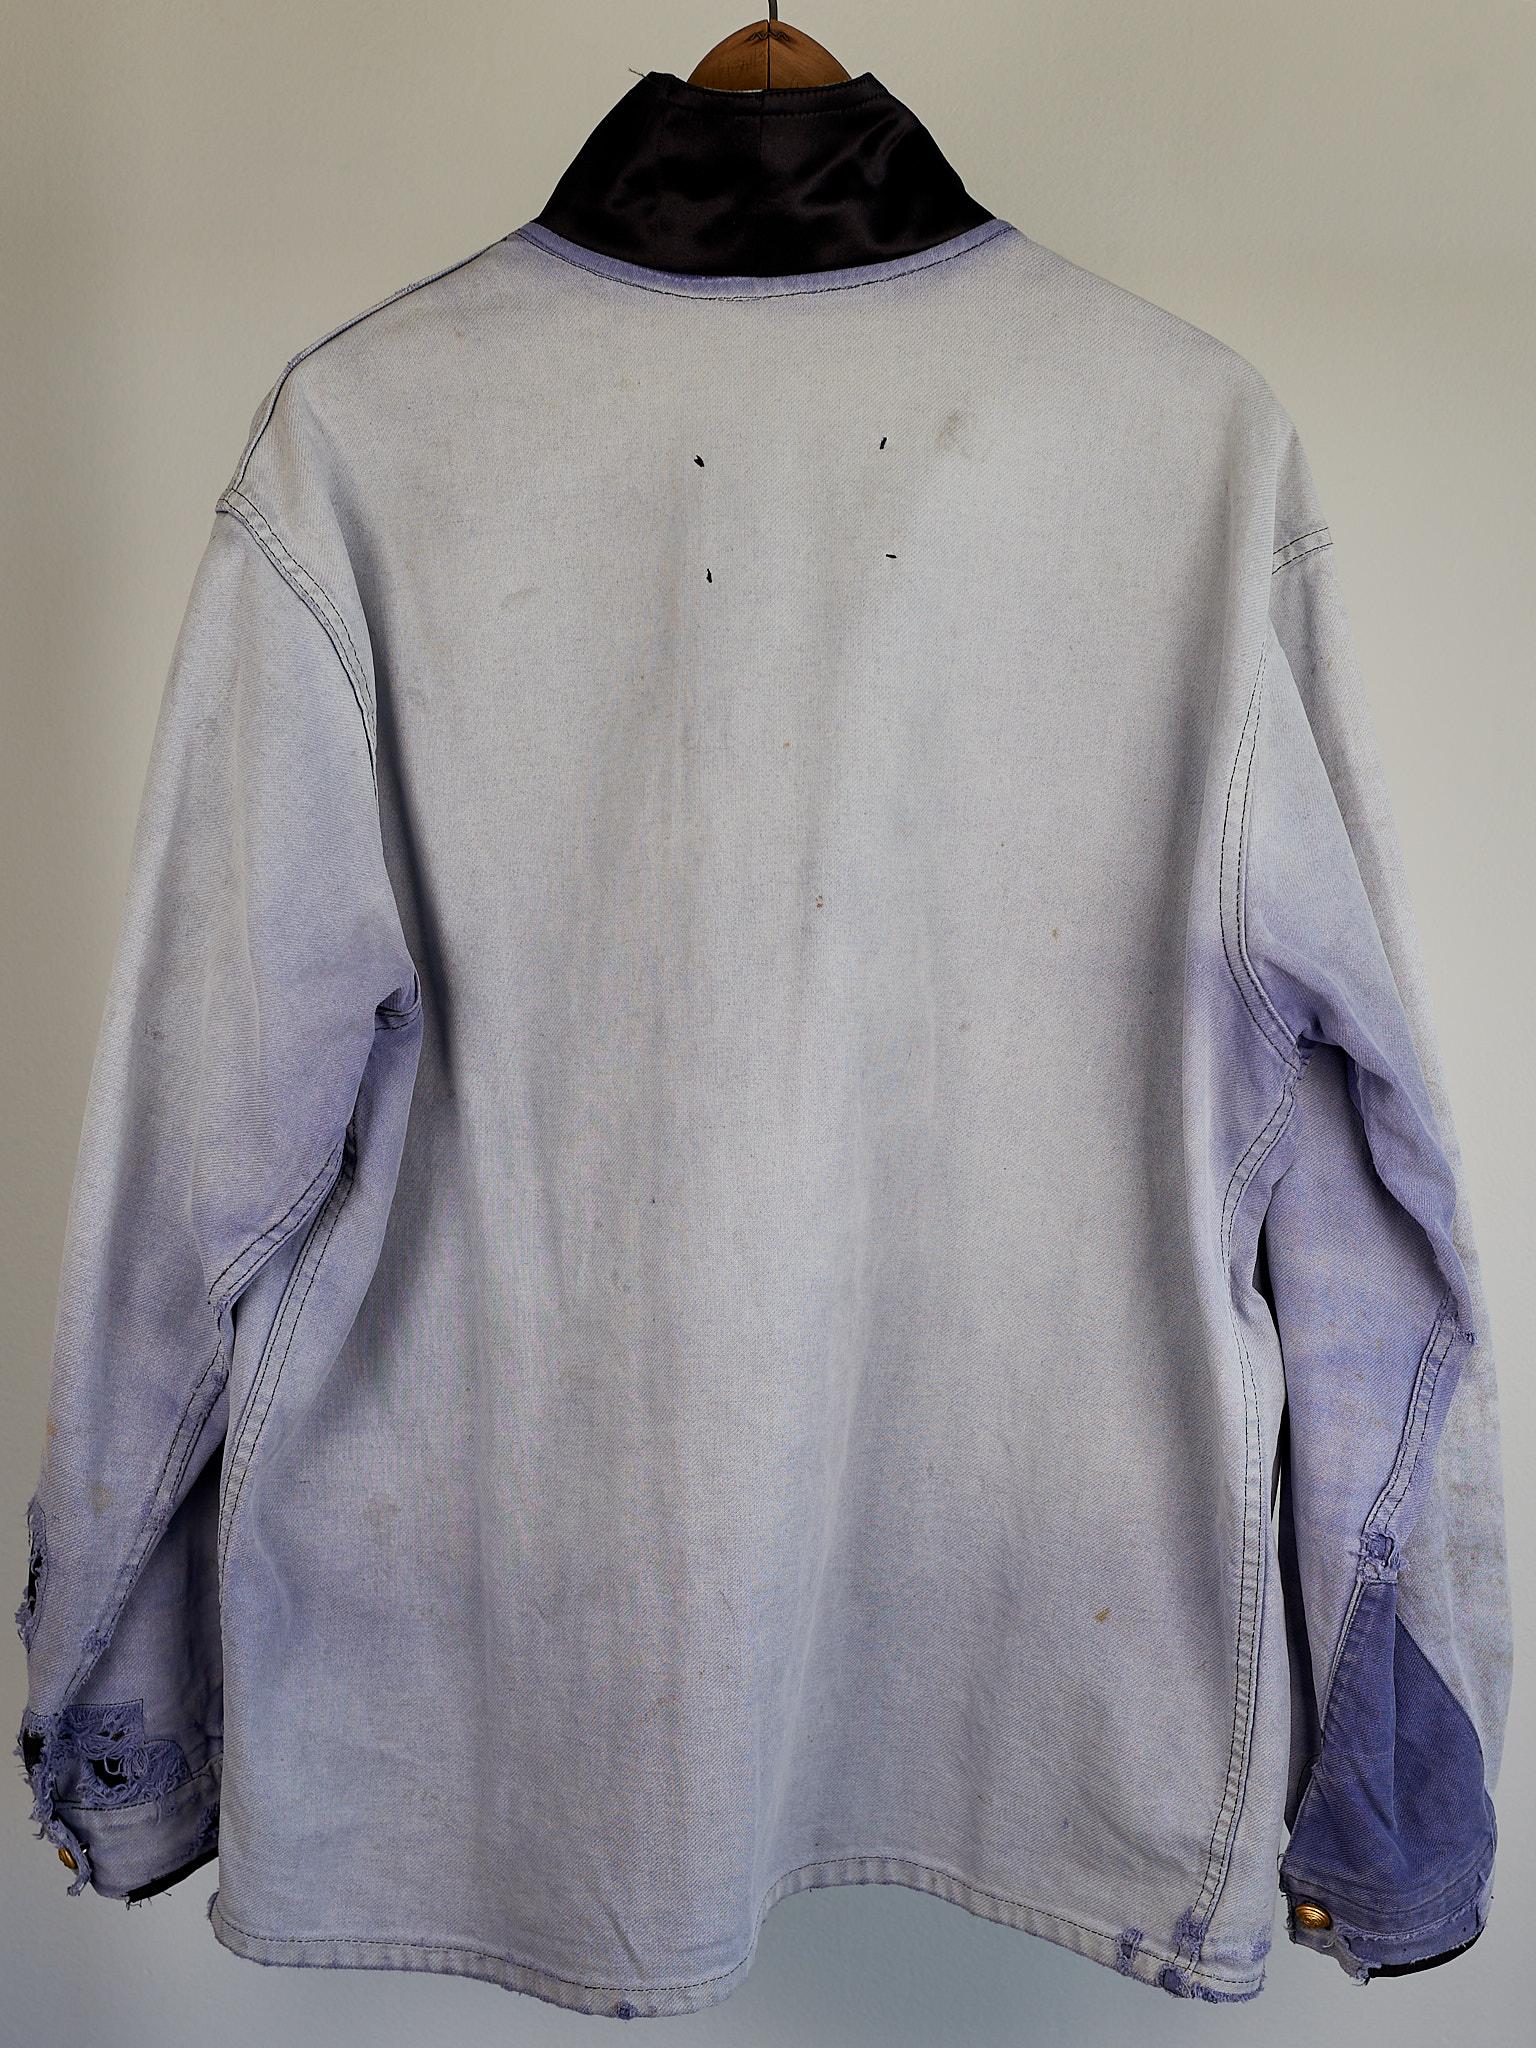 Light Blue Distressed Jacket French Work Wear Vintage Repurposed Silver Braid 5